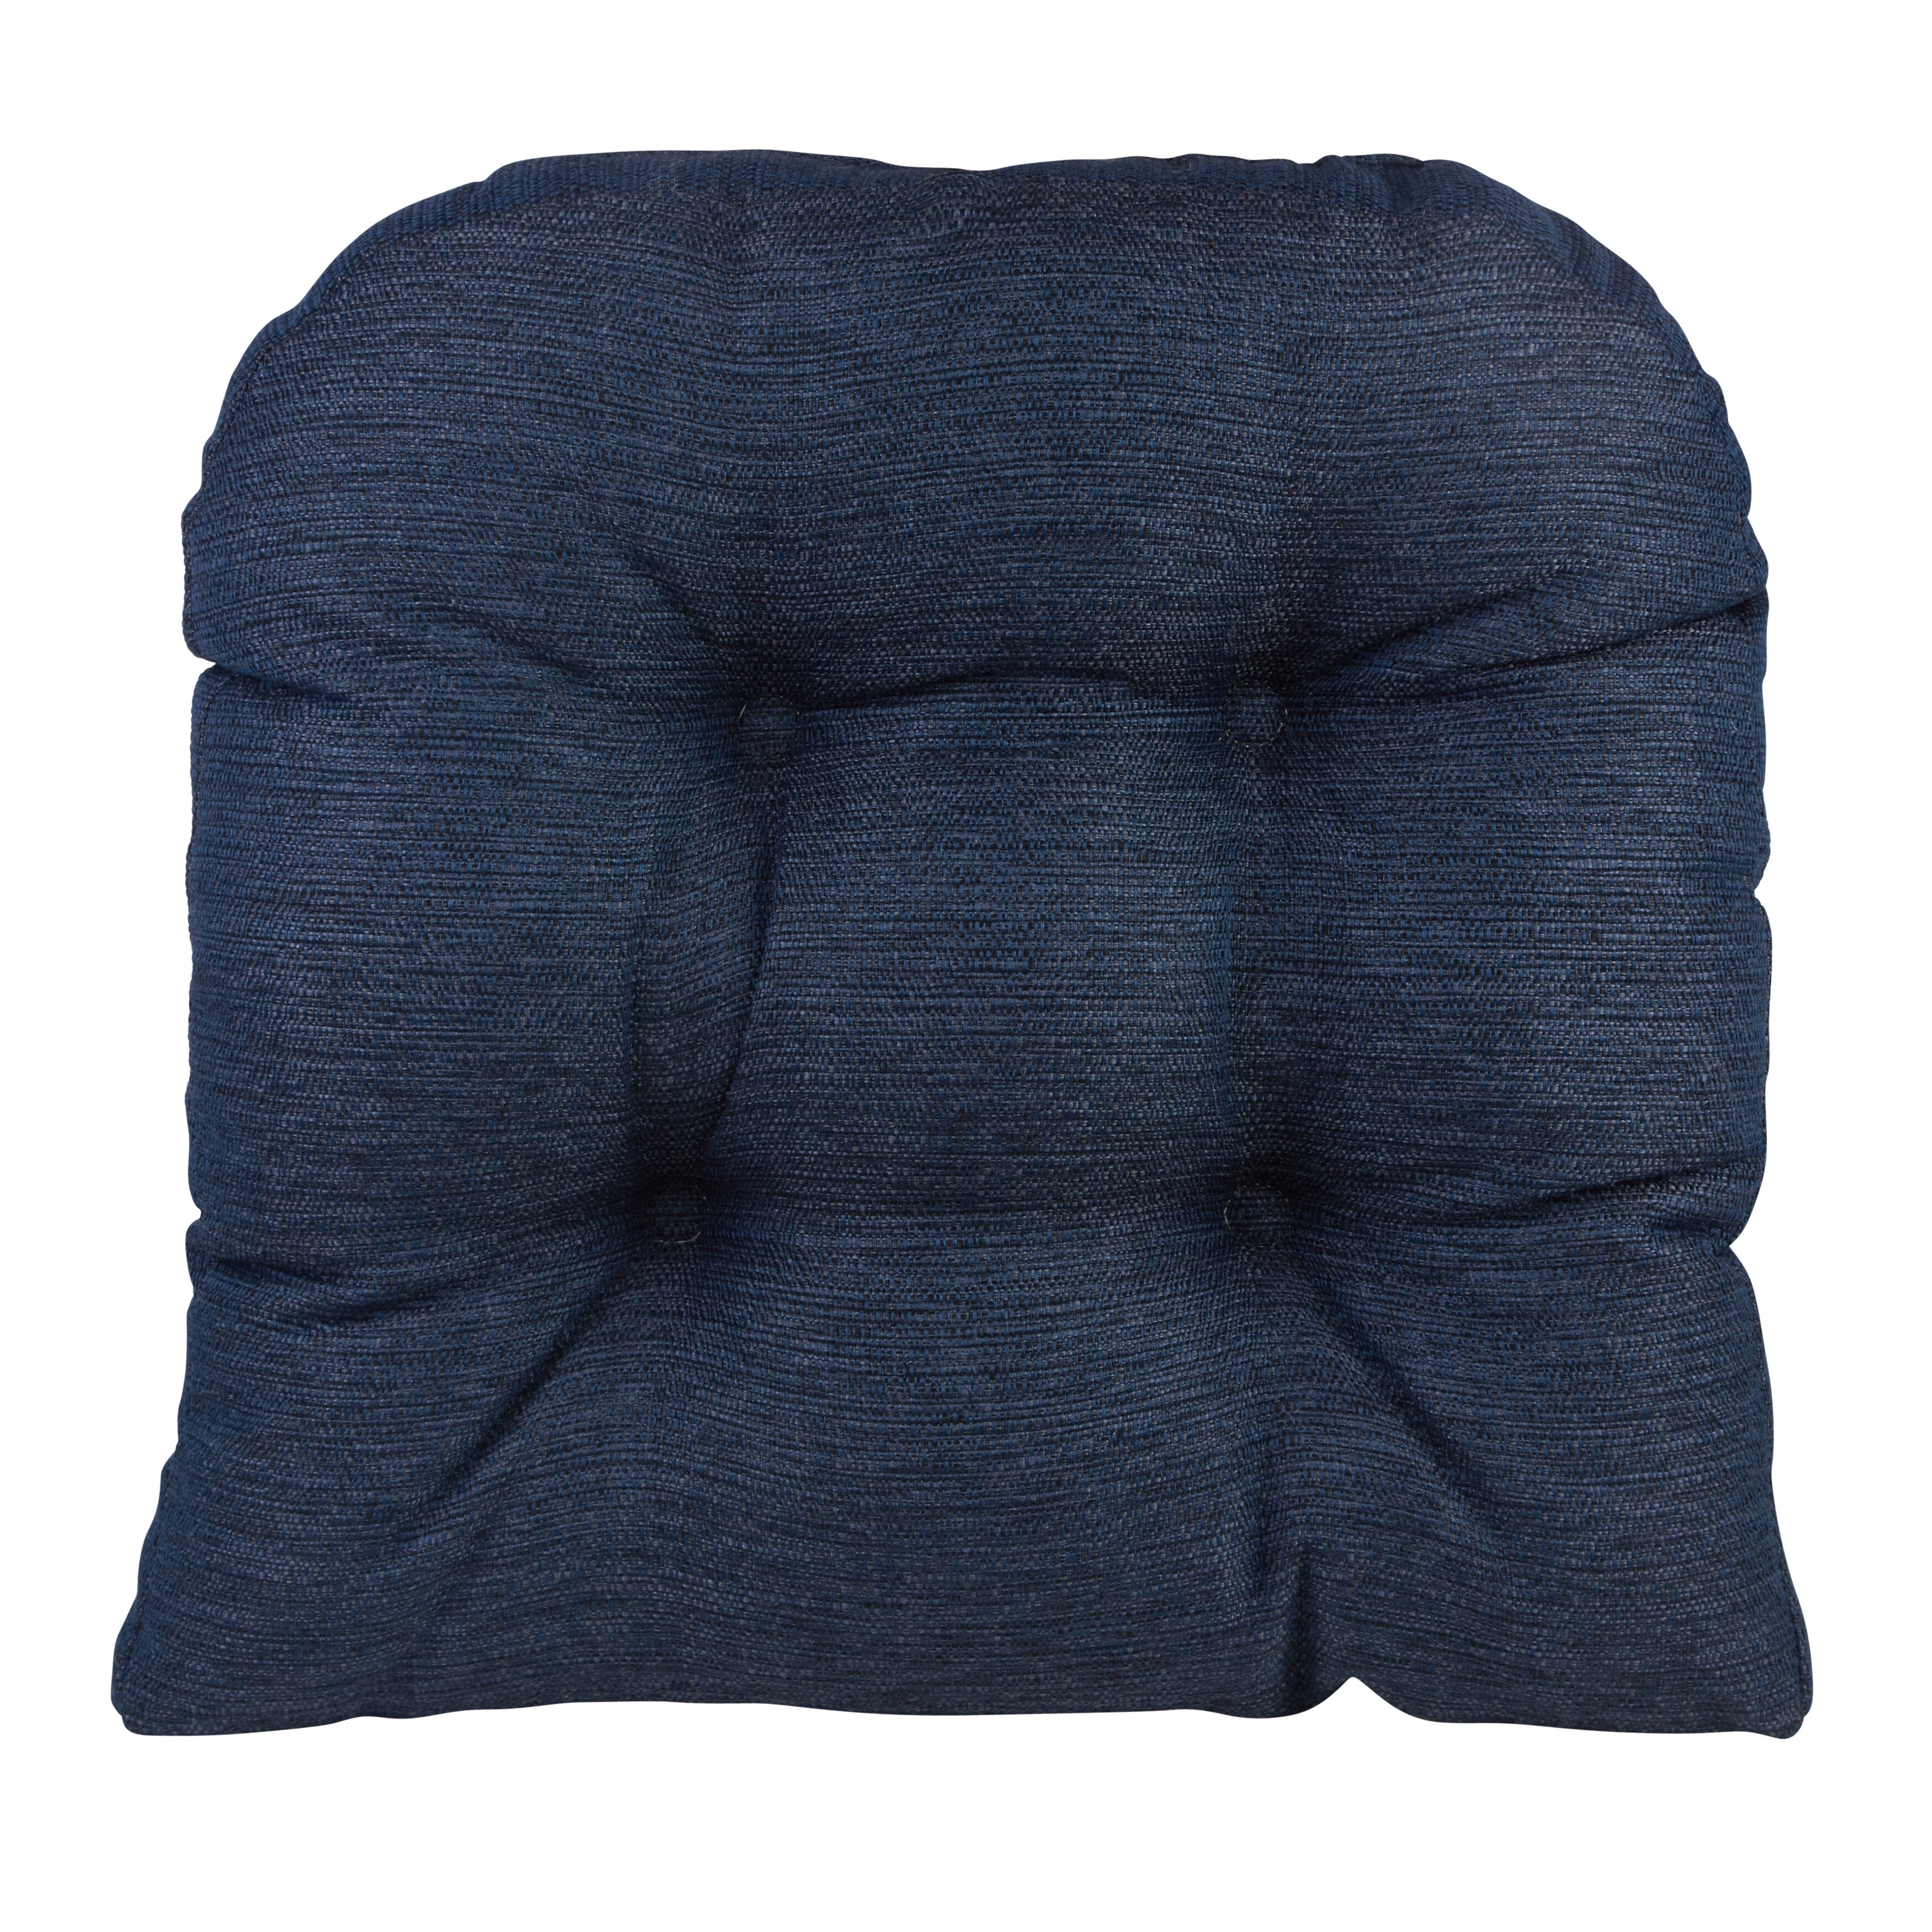 Buy Wholesale China Extra Large Chair Cushion Non-slip Bottom